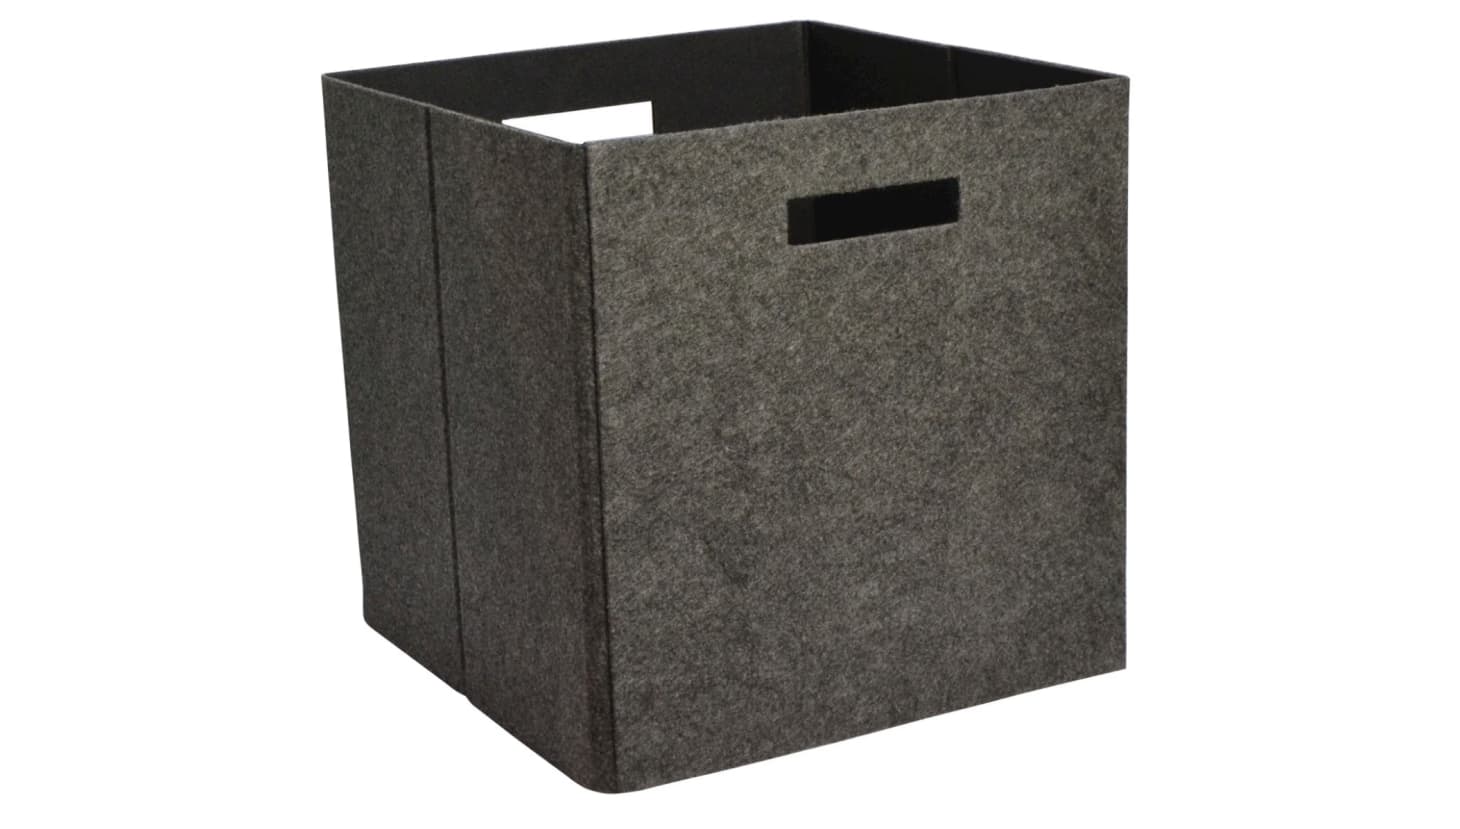 Where To Buy Storage Cubes For An Ikea Kallax Bookshelf